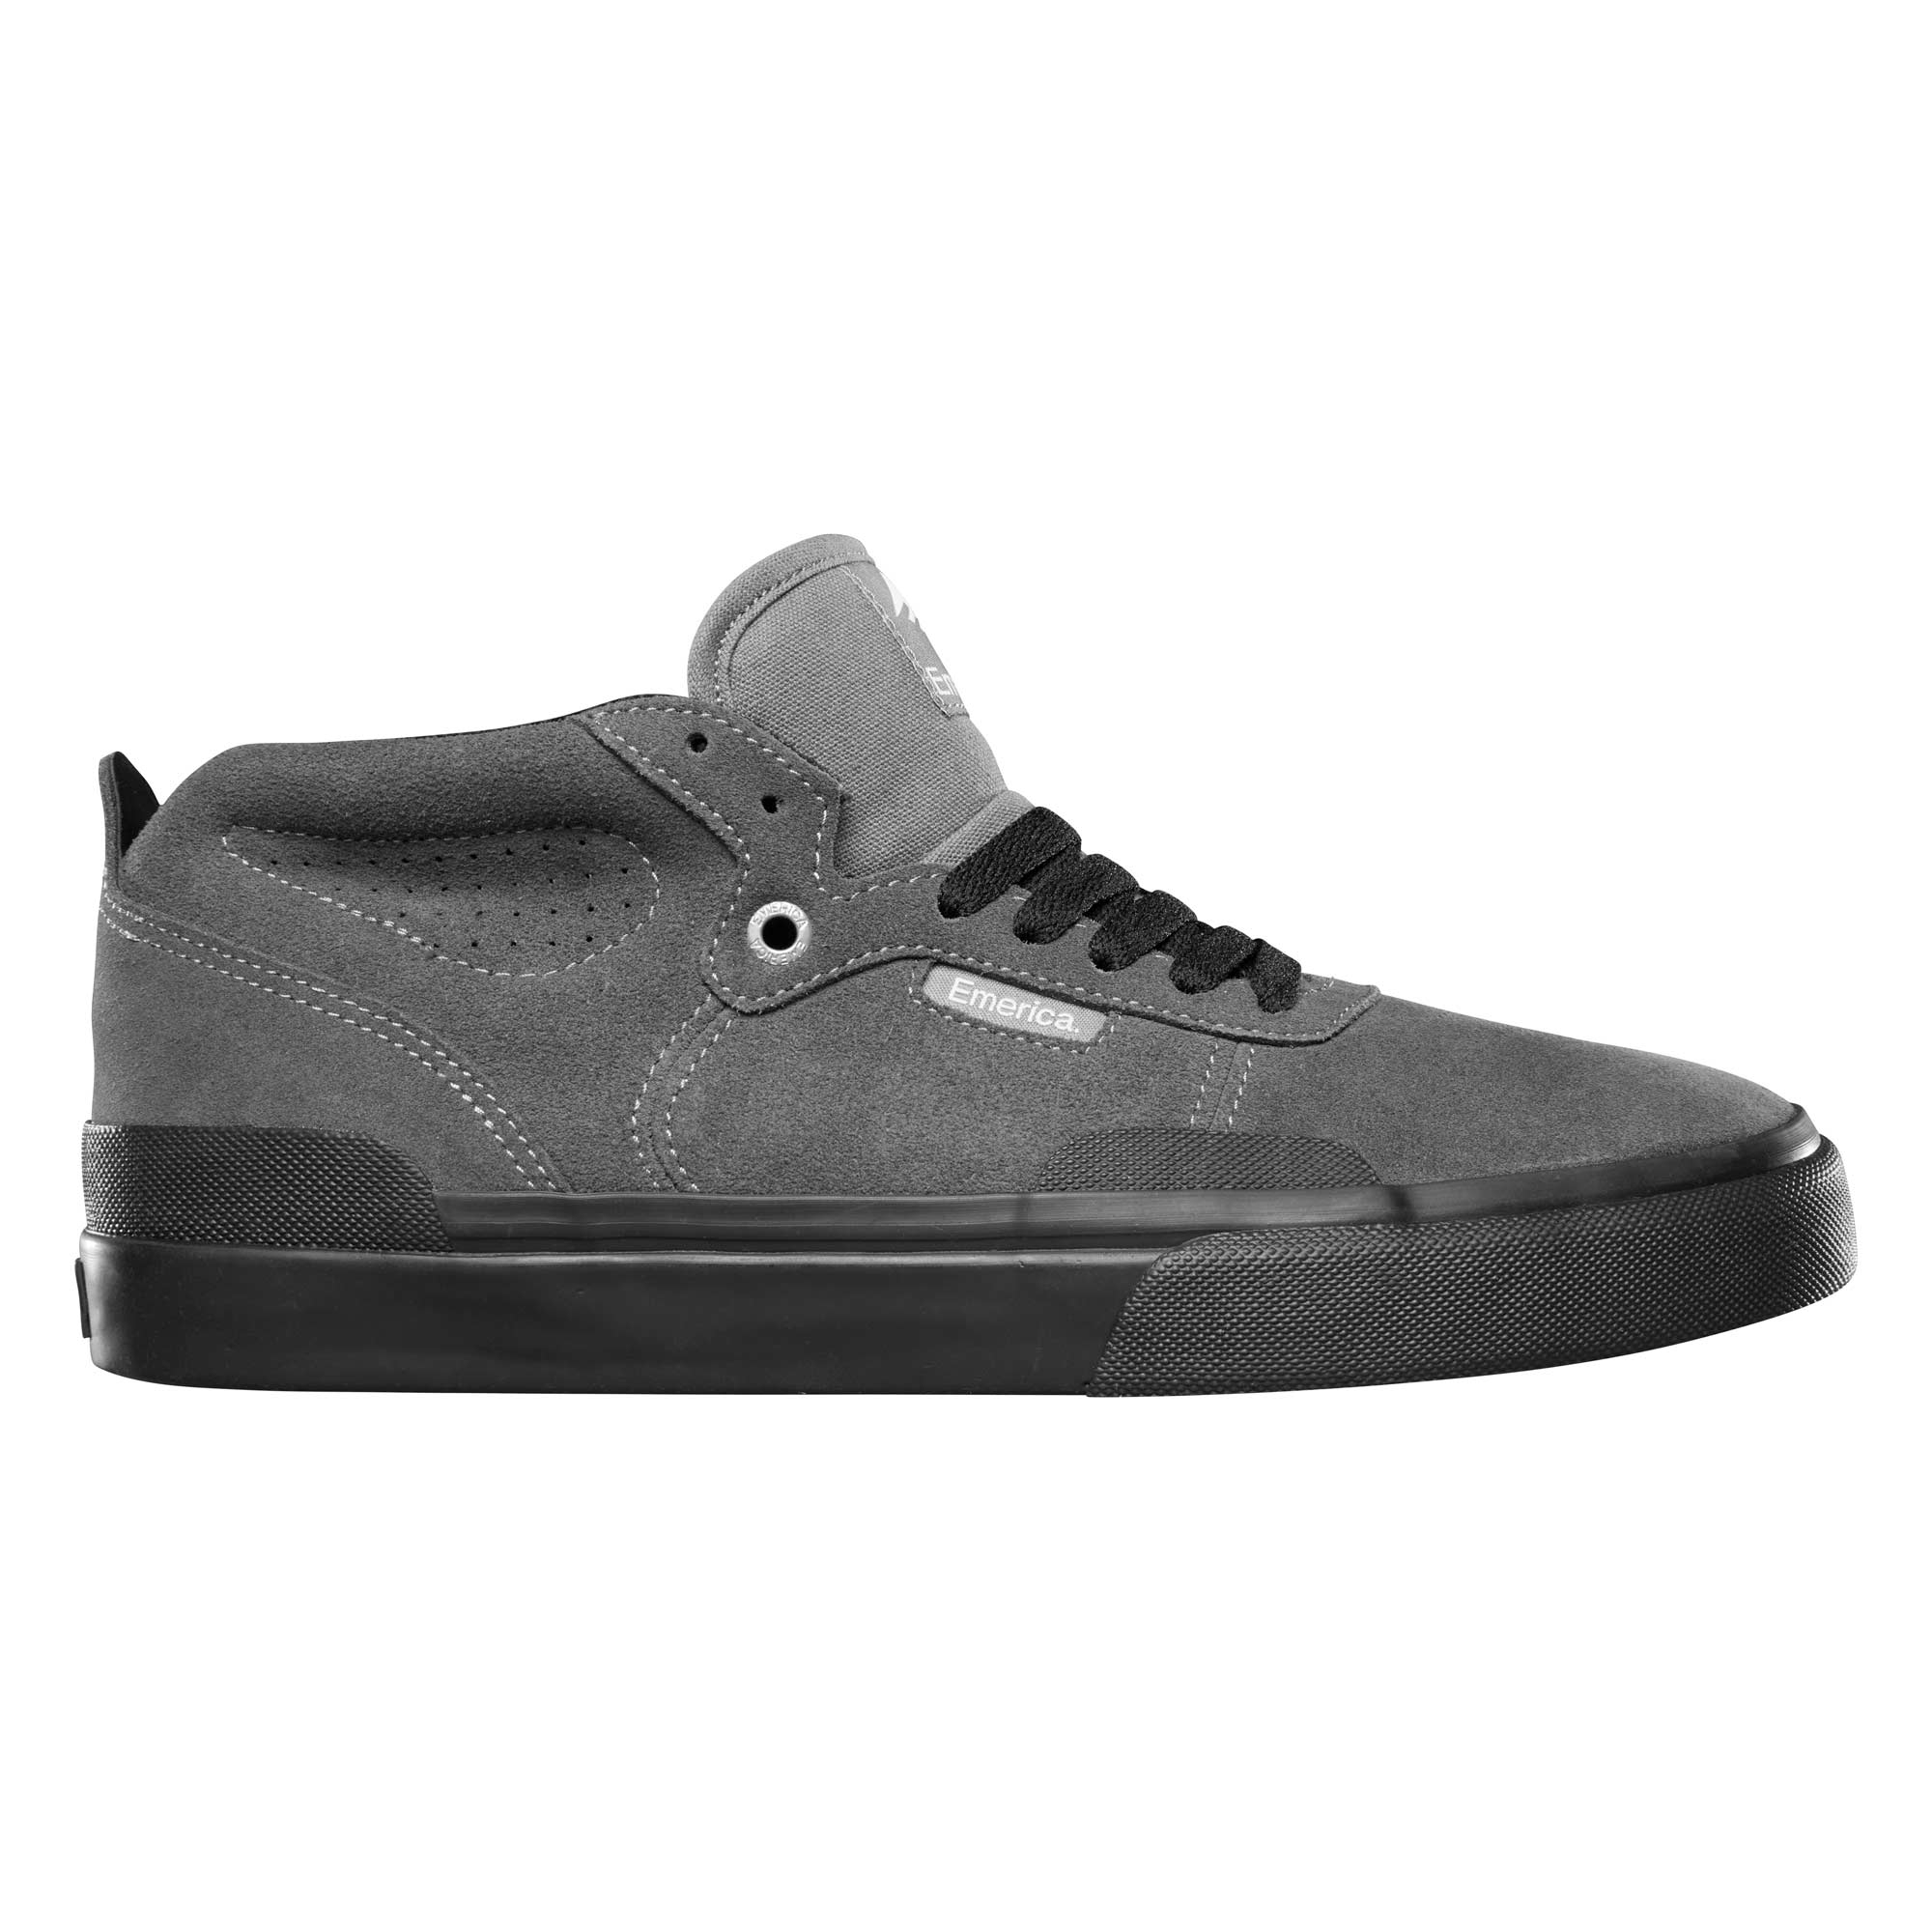 EMERICA Shoe PILLAR gry/bla, grey/black